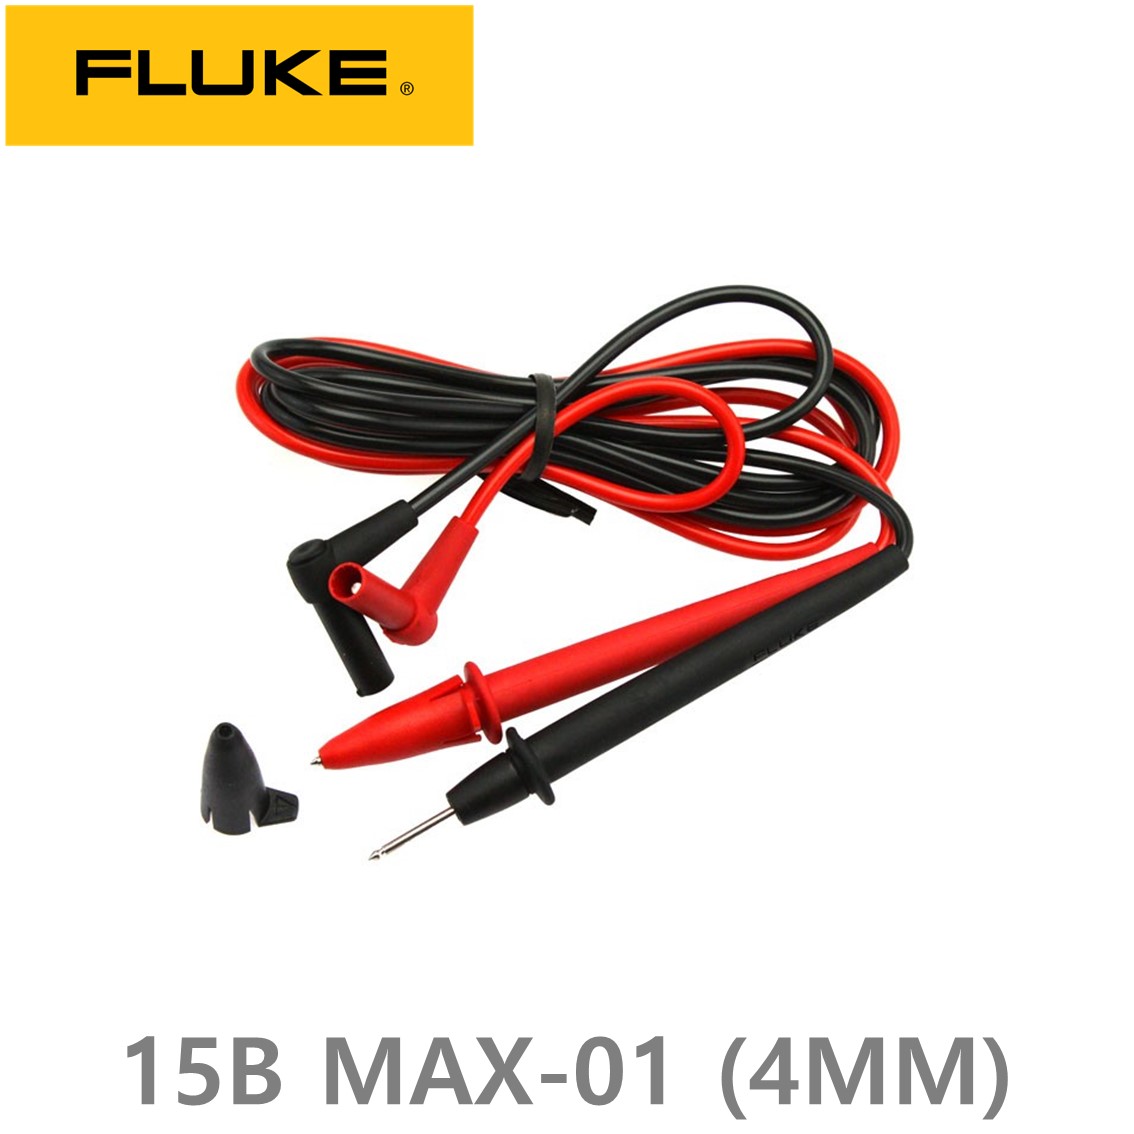 [ FLUKE 15B MAX-01 ] 정품 플루크 15B MAX-01 멀티미터, 테스터기, 4MM 테스트리드